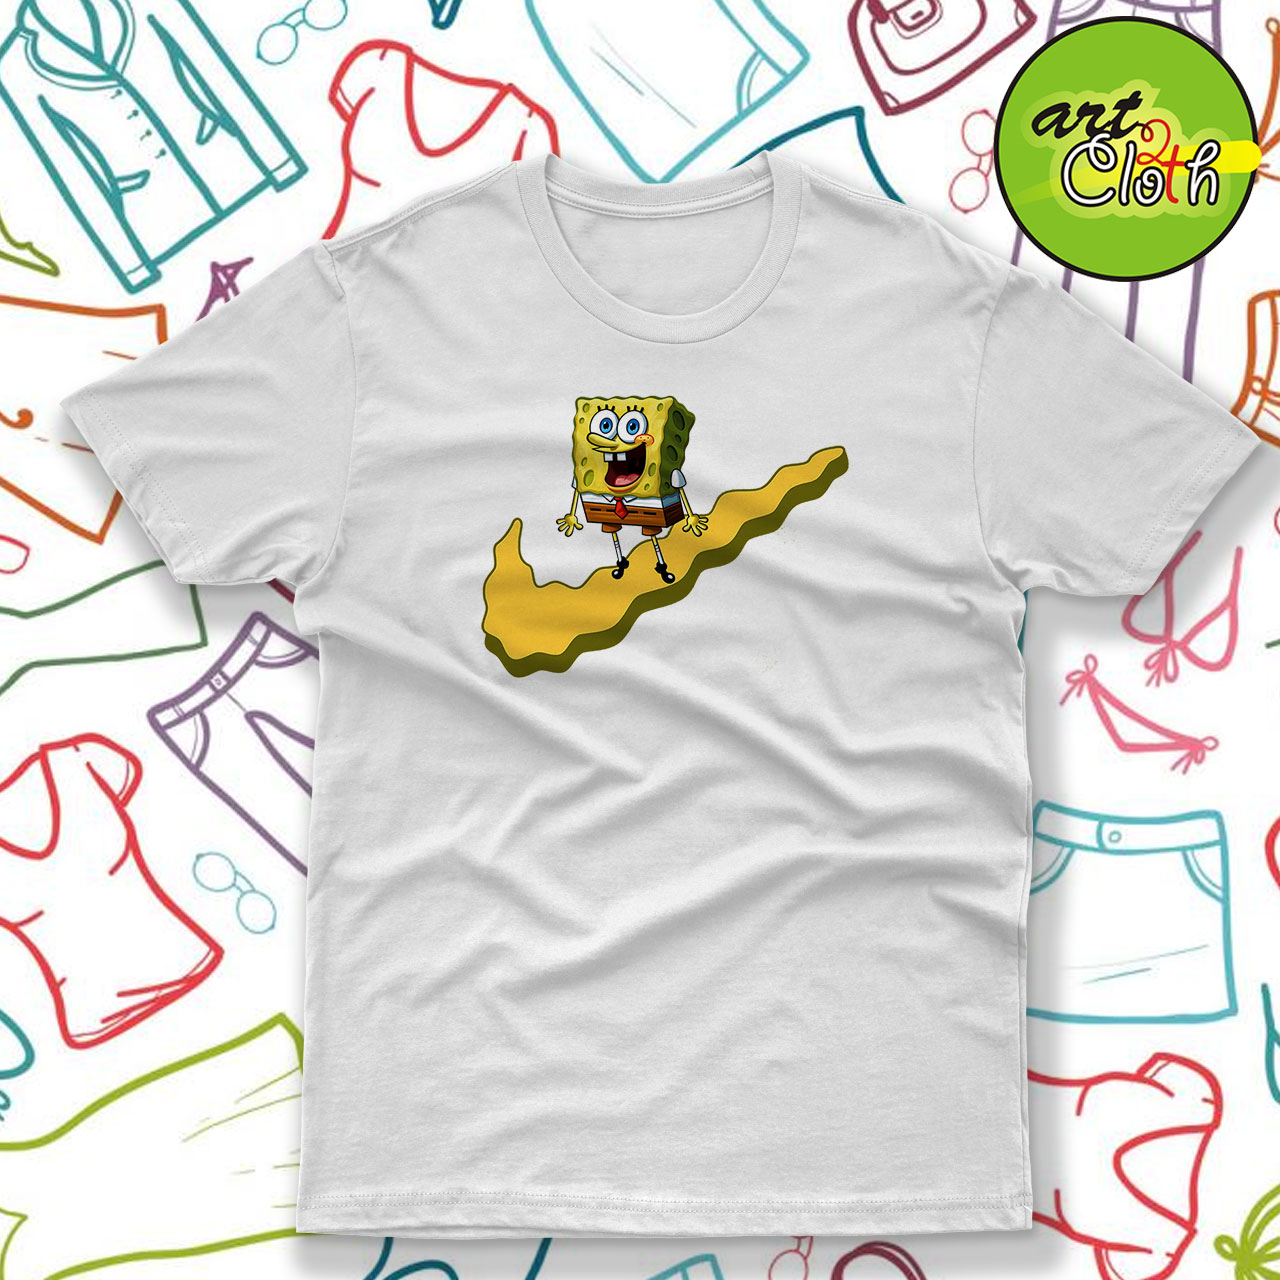 spongebob shirt nike